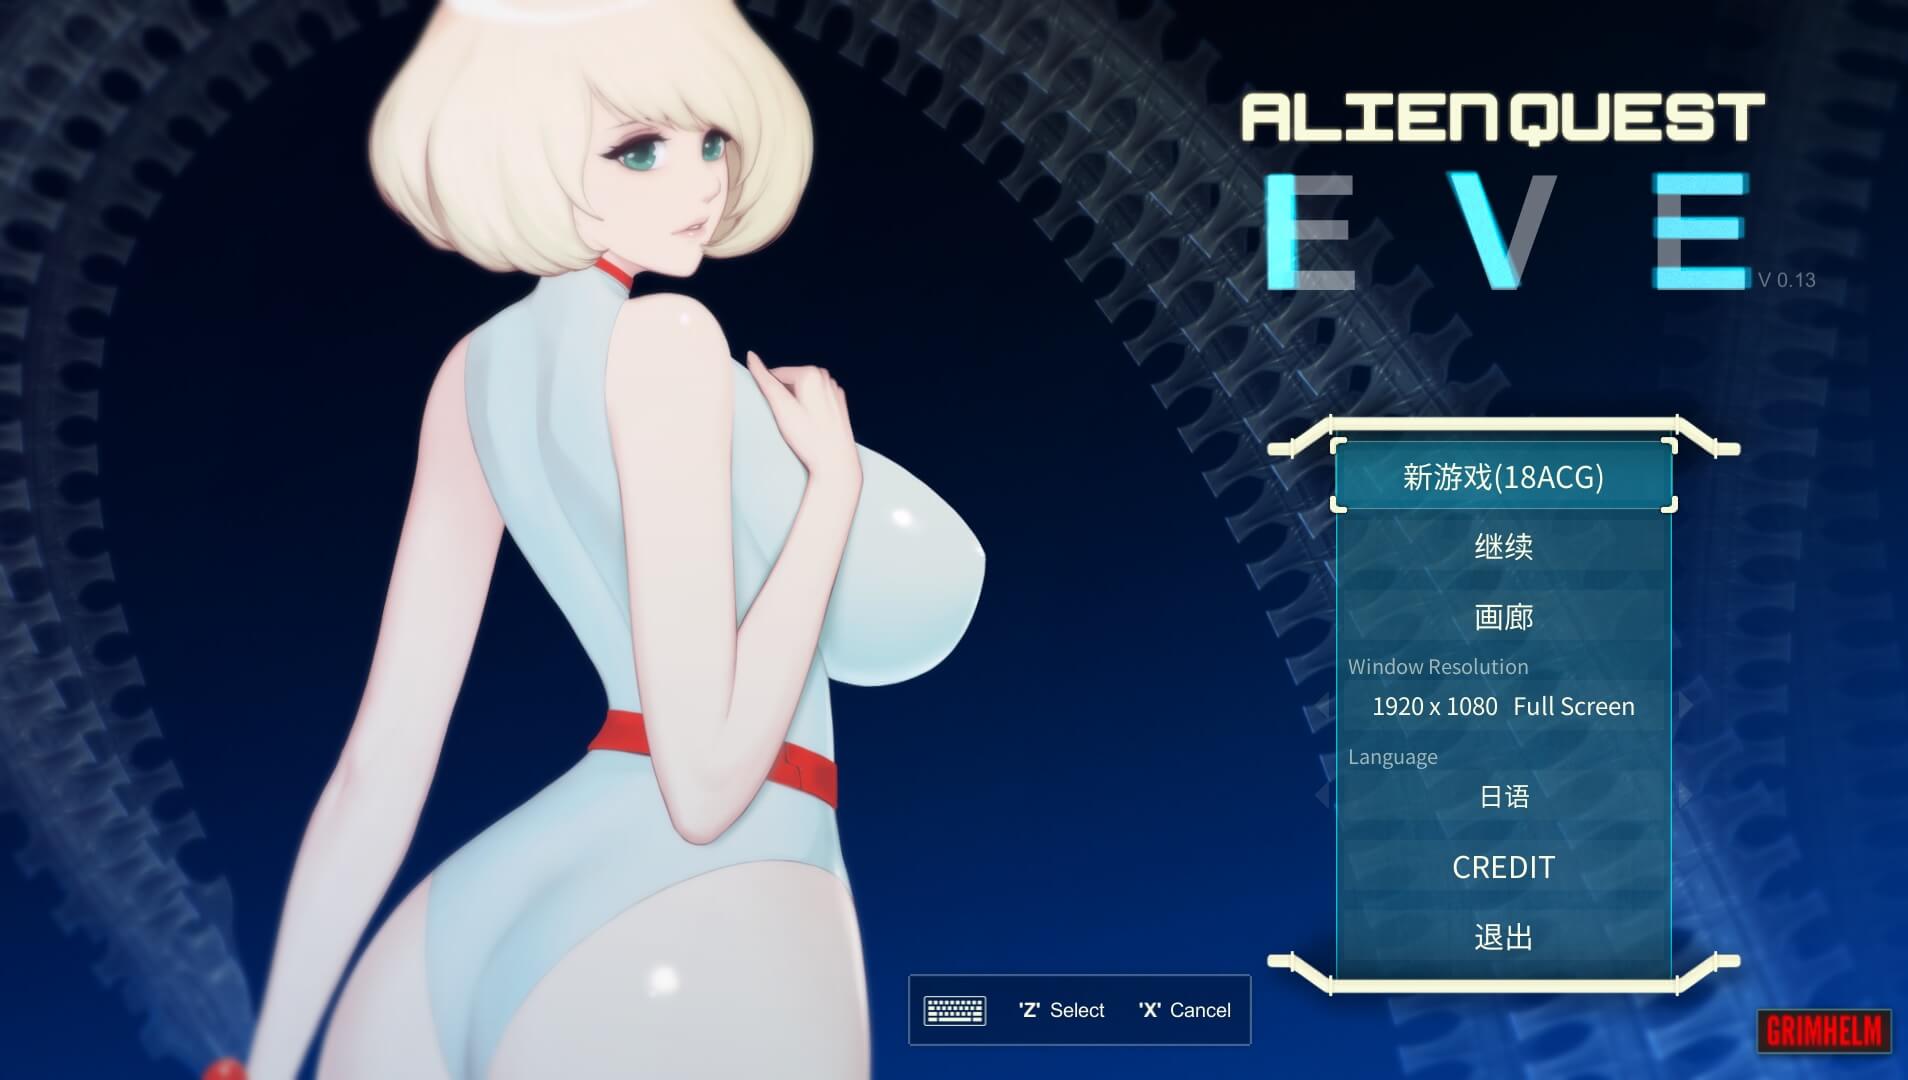 Alien_Quest-EVE 0.13A (173MB RAR)